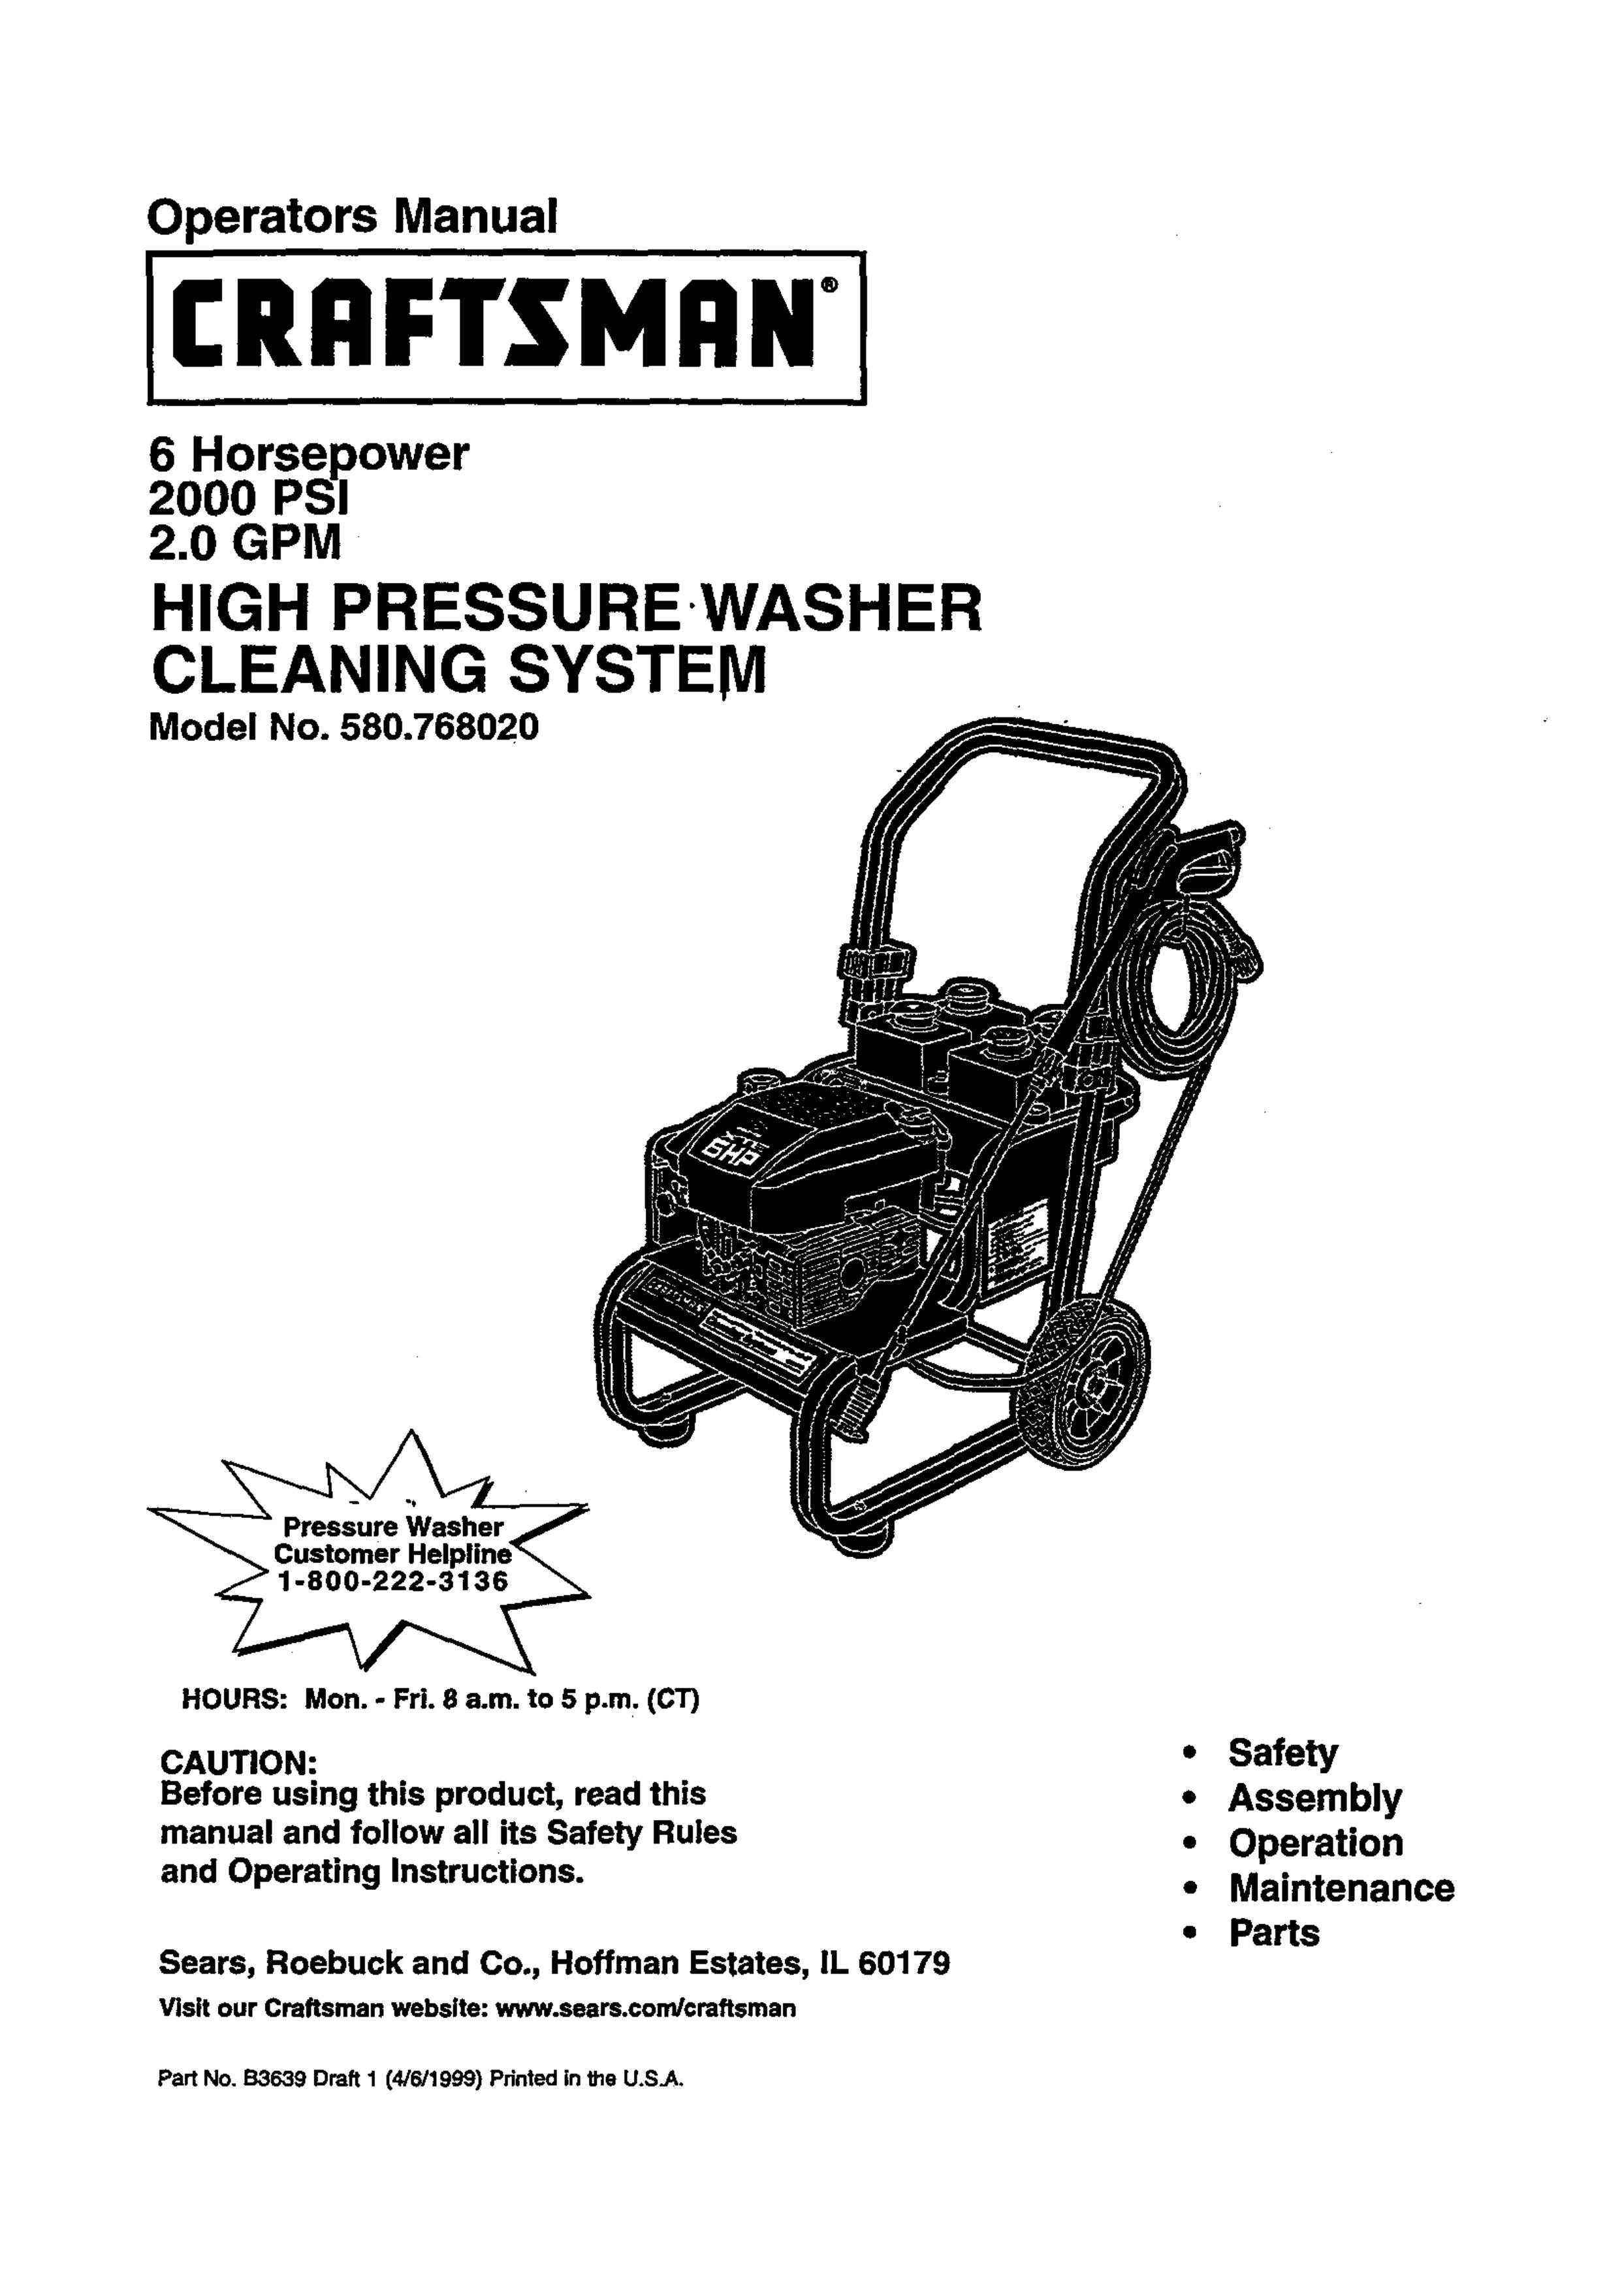 Craftsman 580.768020 Pressure Washer User Manual